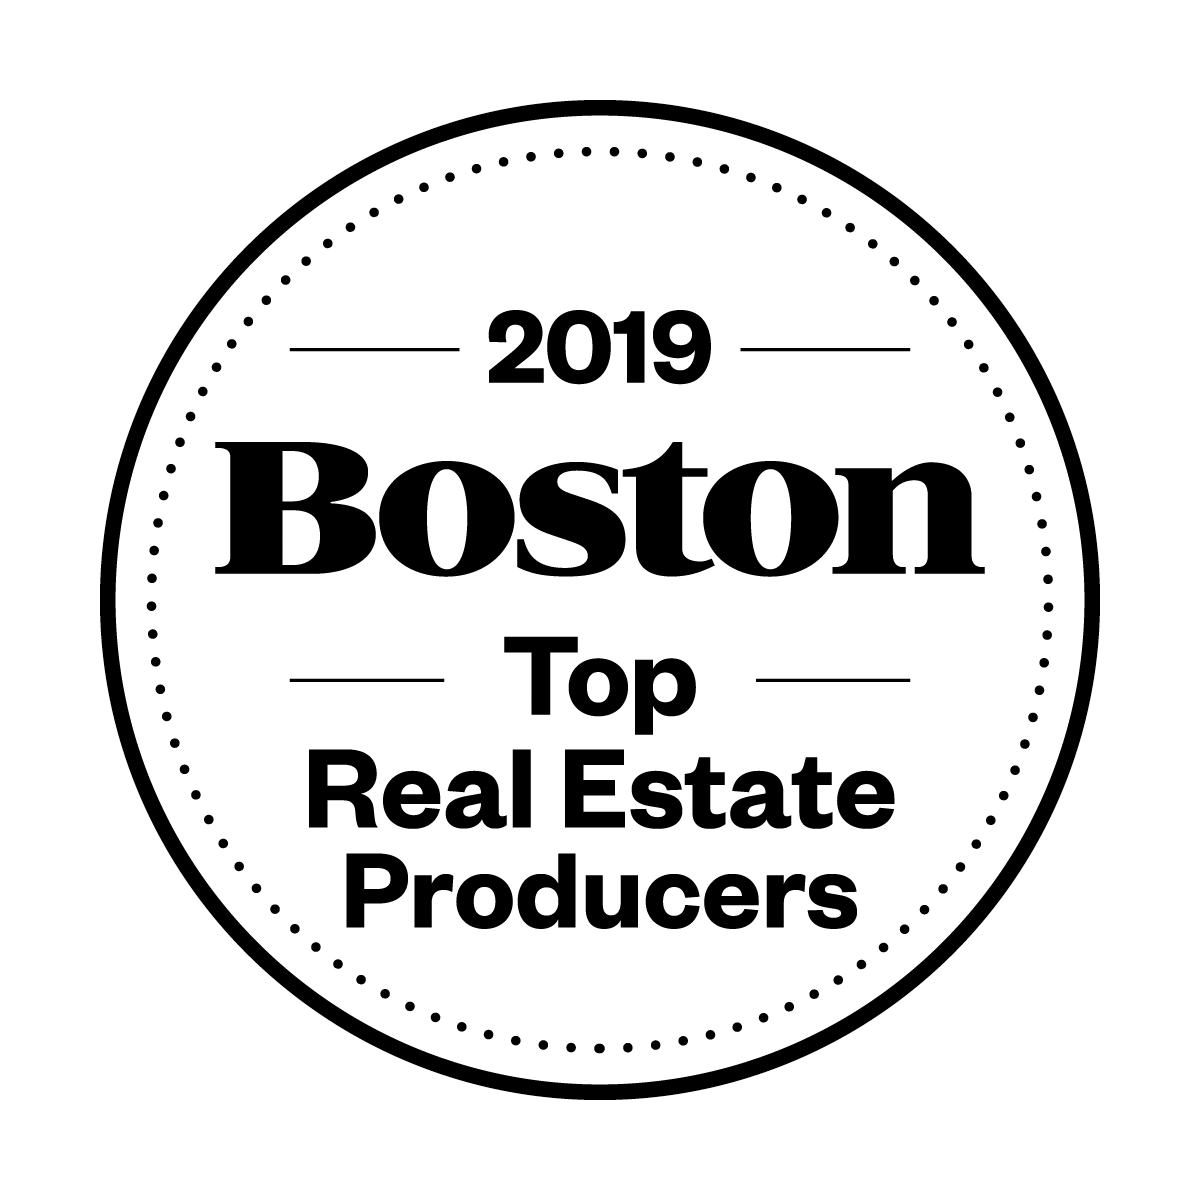 Boston Magazine Top Real Estate Producers Window Decals by NewsKeepsake